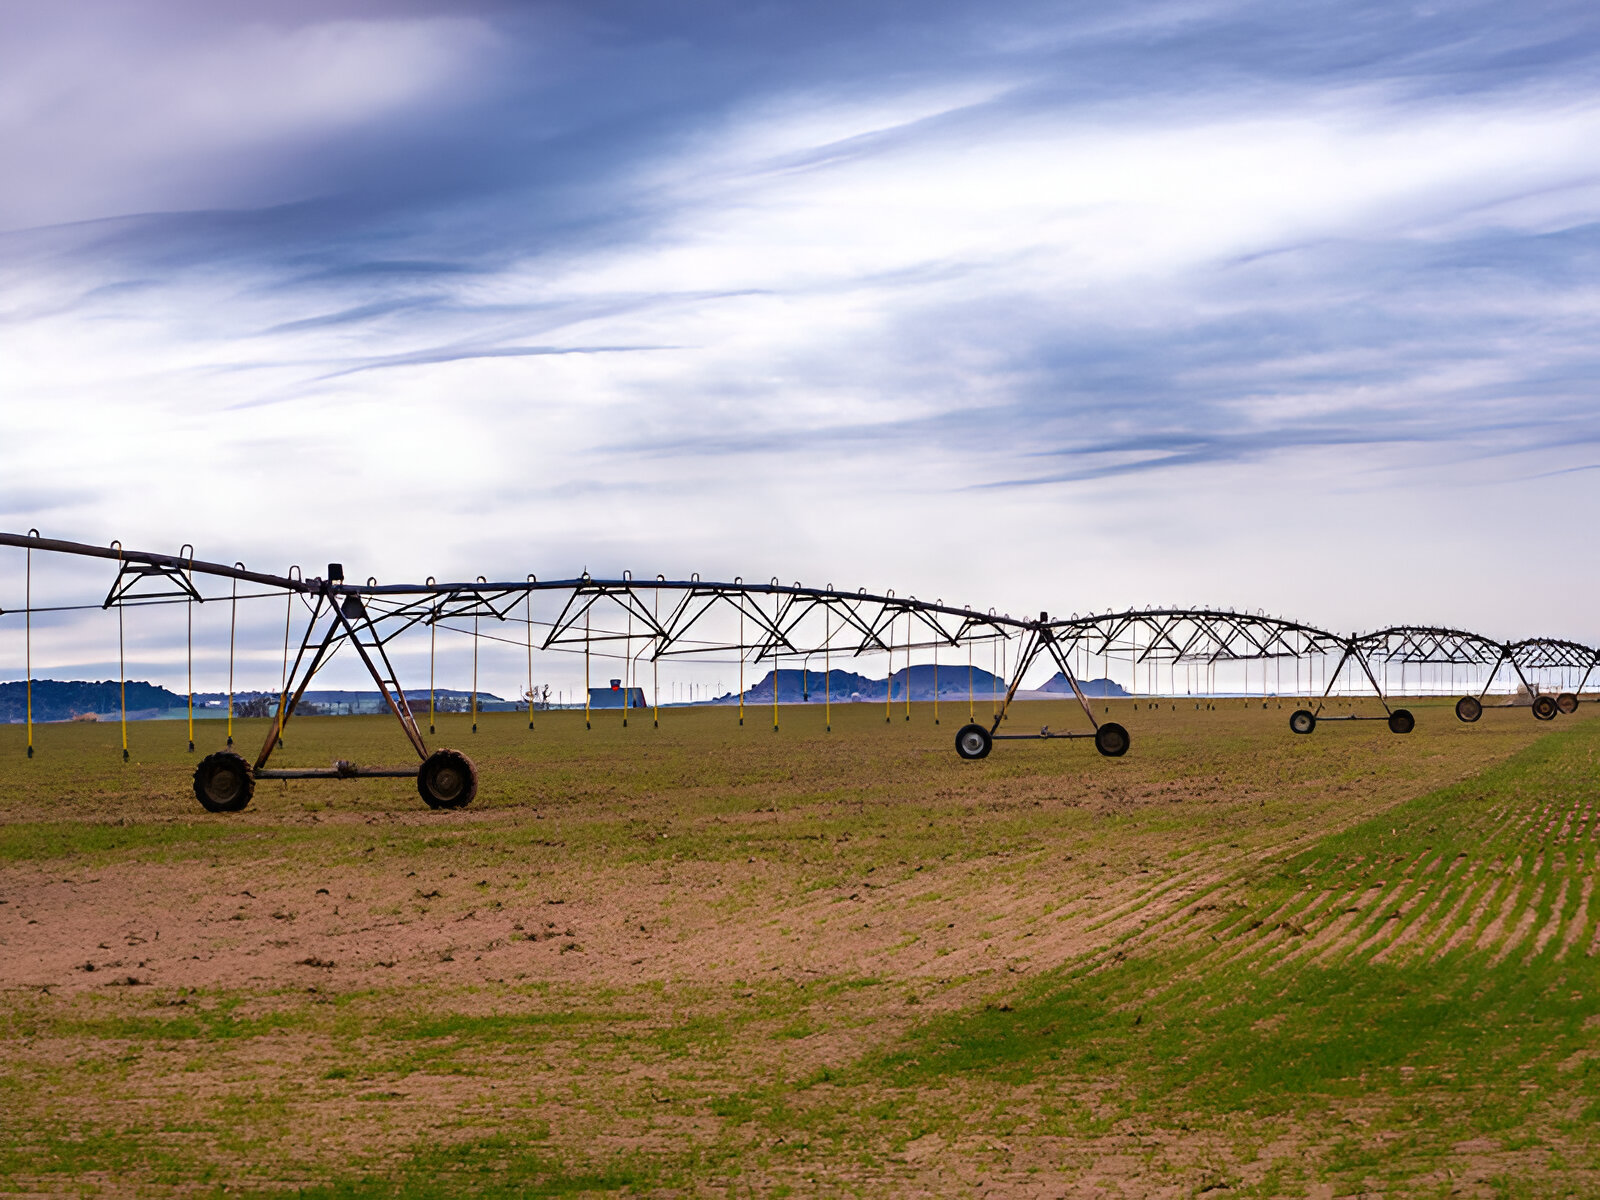 K-State irrigation engineer bringing water competition to Kansas - High Plains Journal